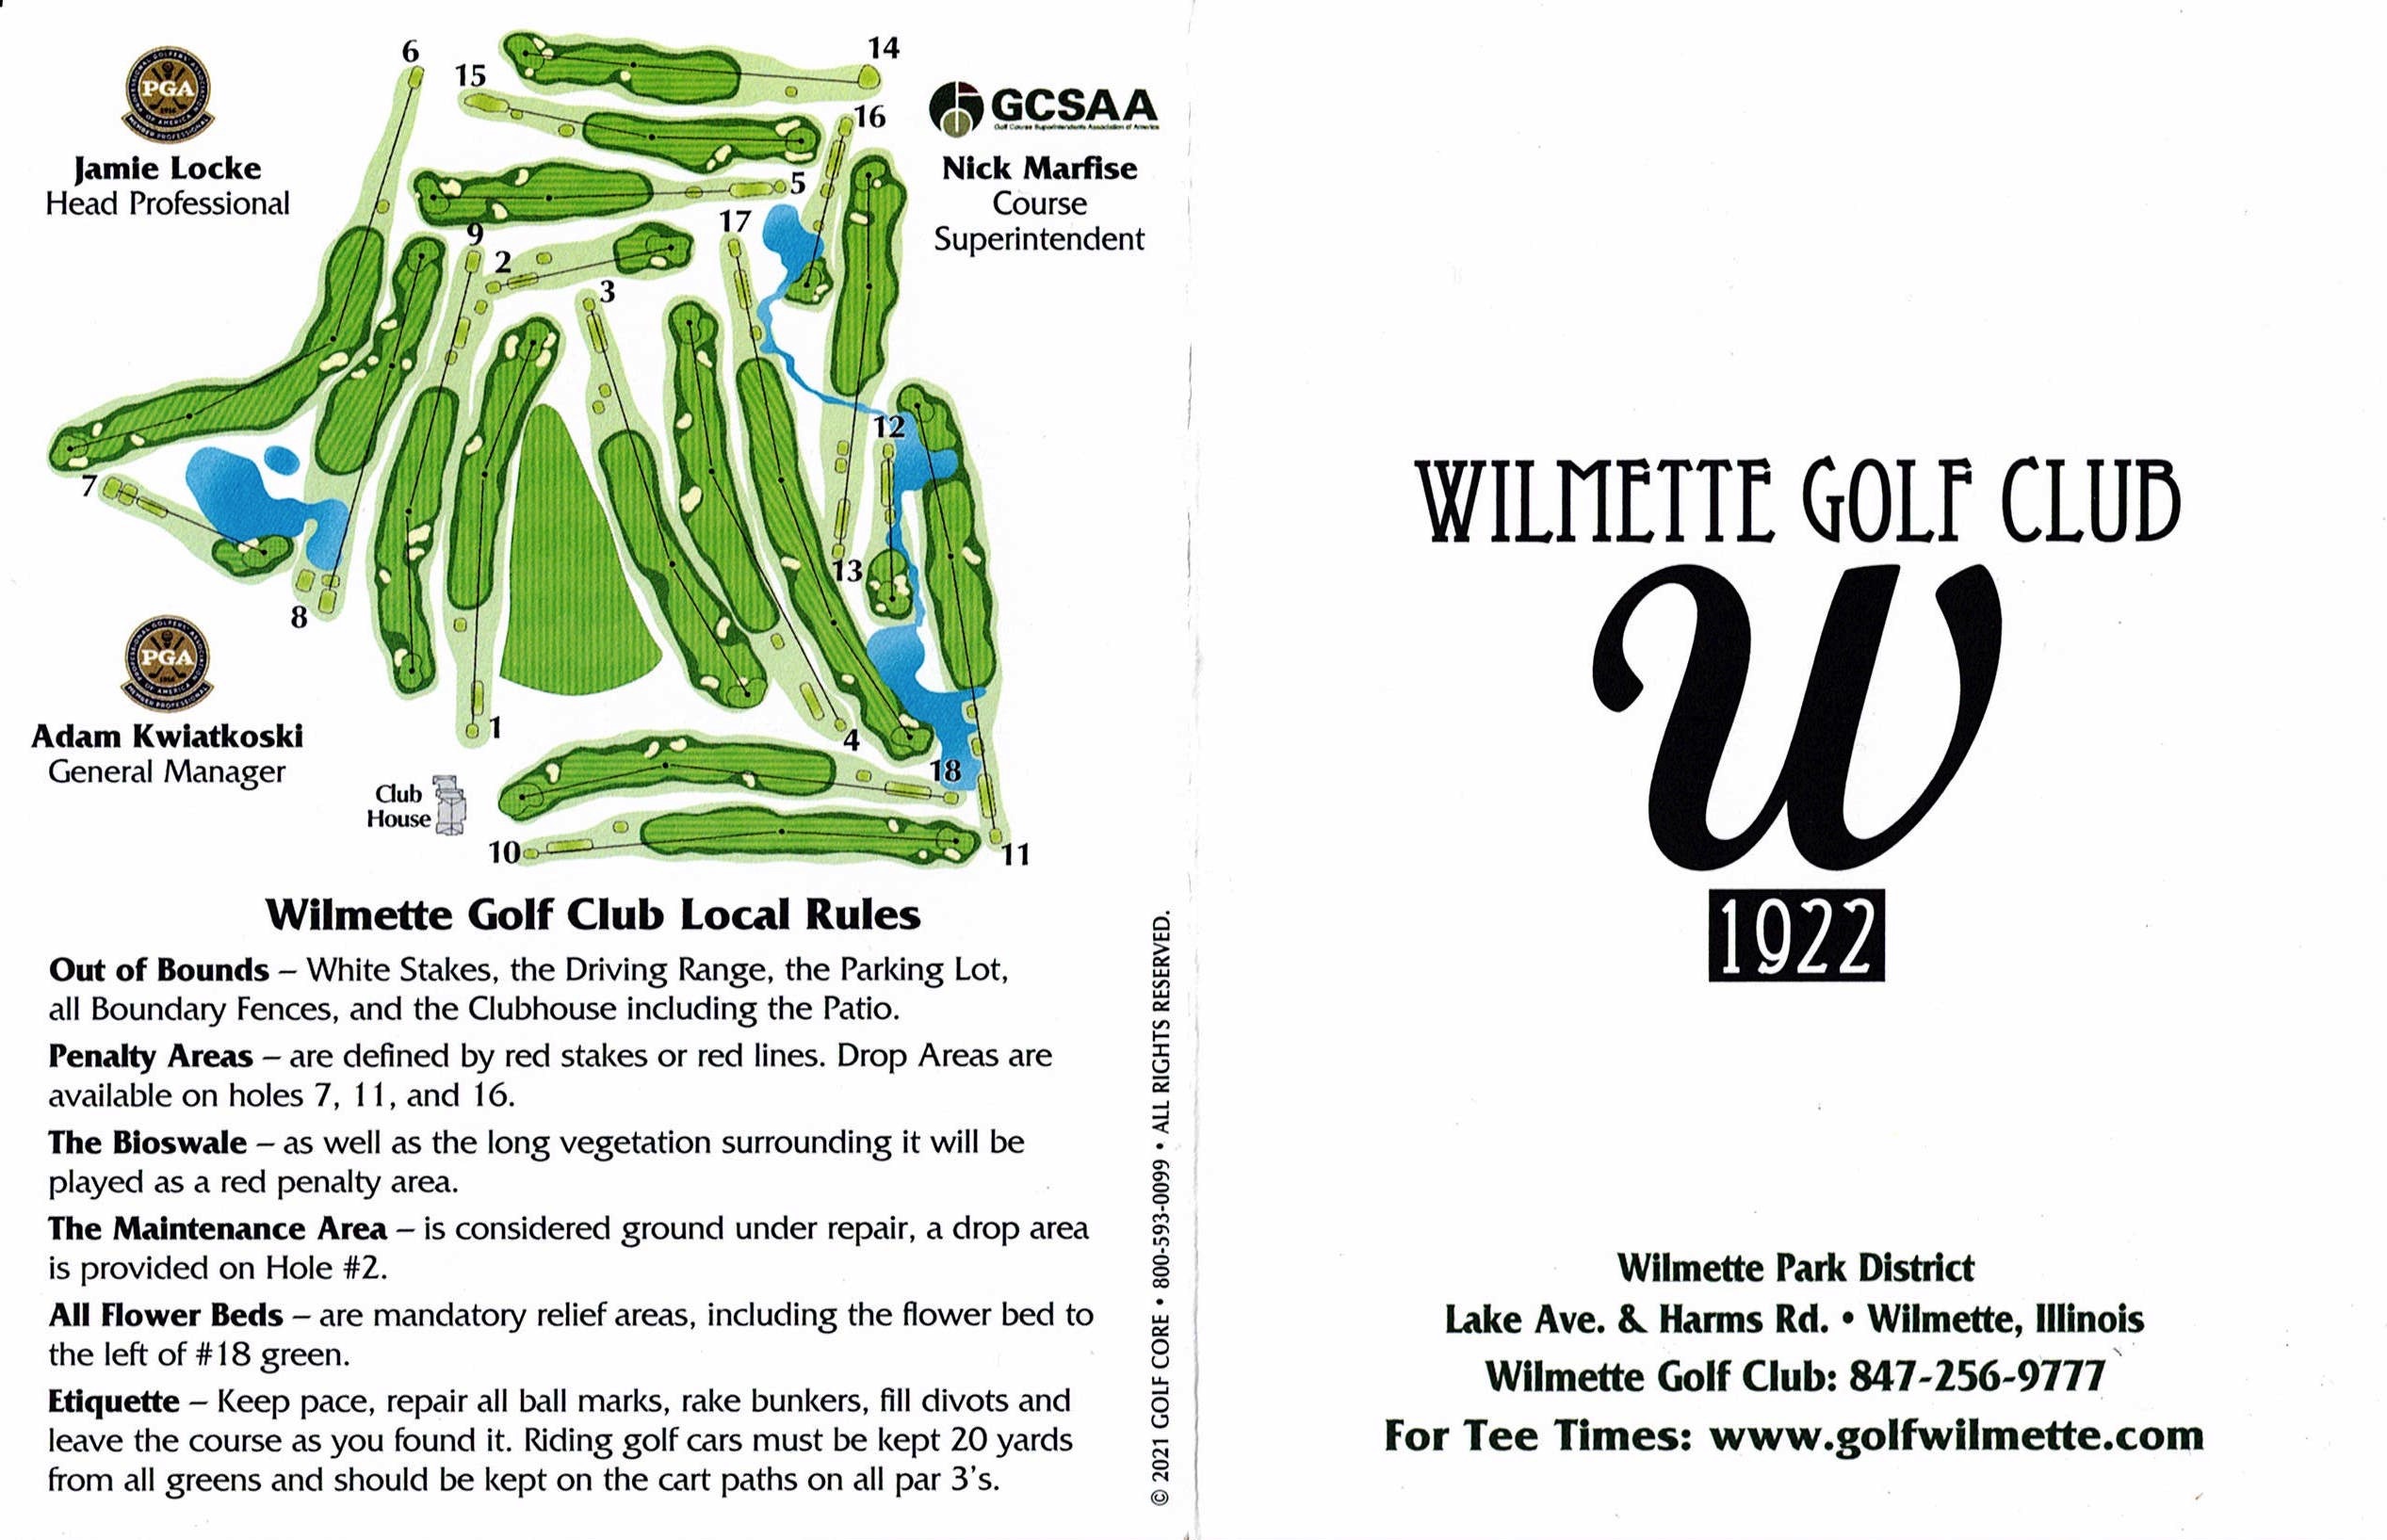 Scan of the scorecard from Wilmette Golf Club in Wilmette, Illinois. 